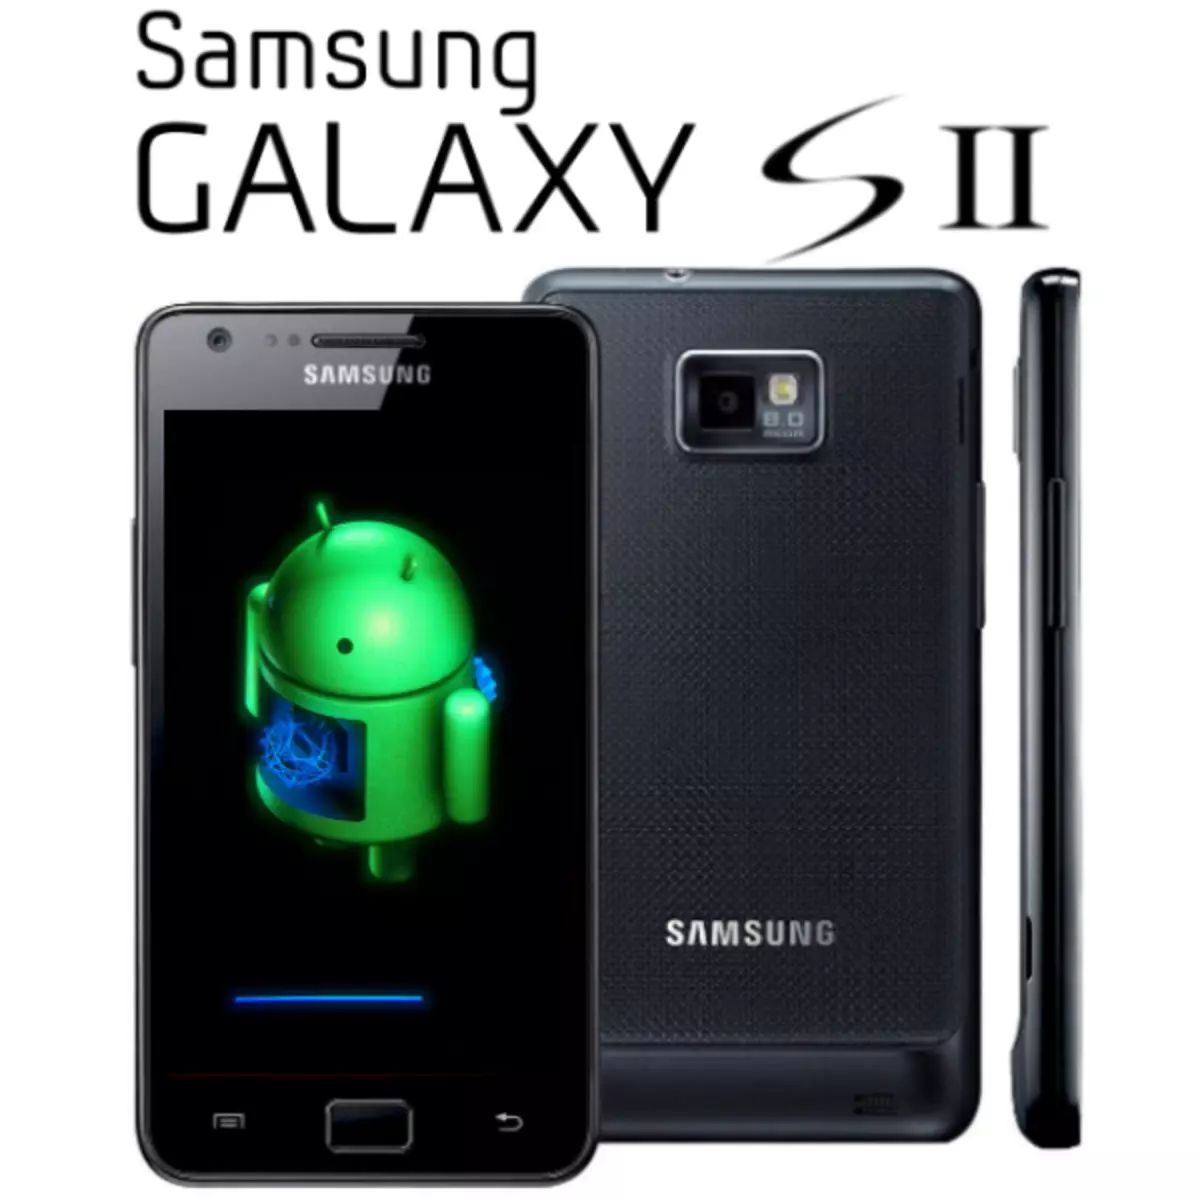 Firmware Samsung Galaxy S 2 GT-I9100